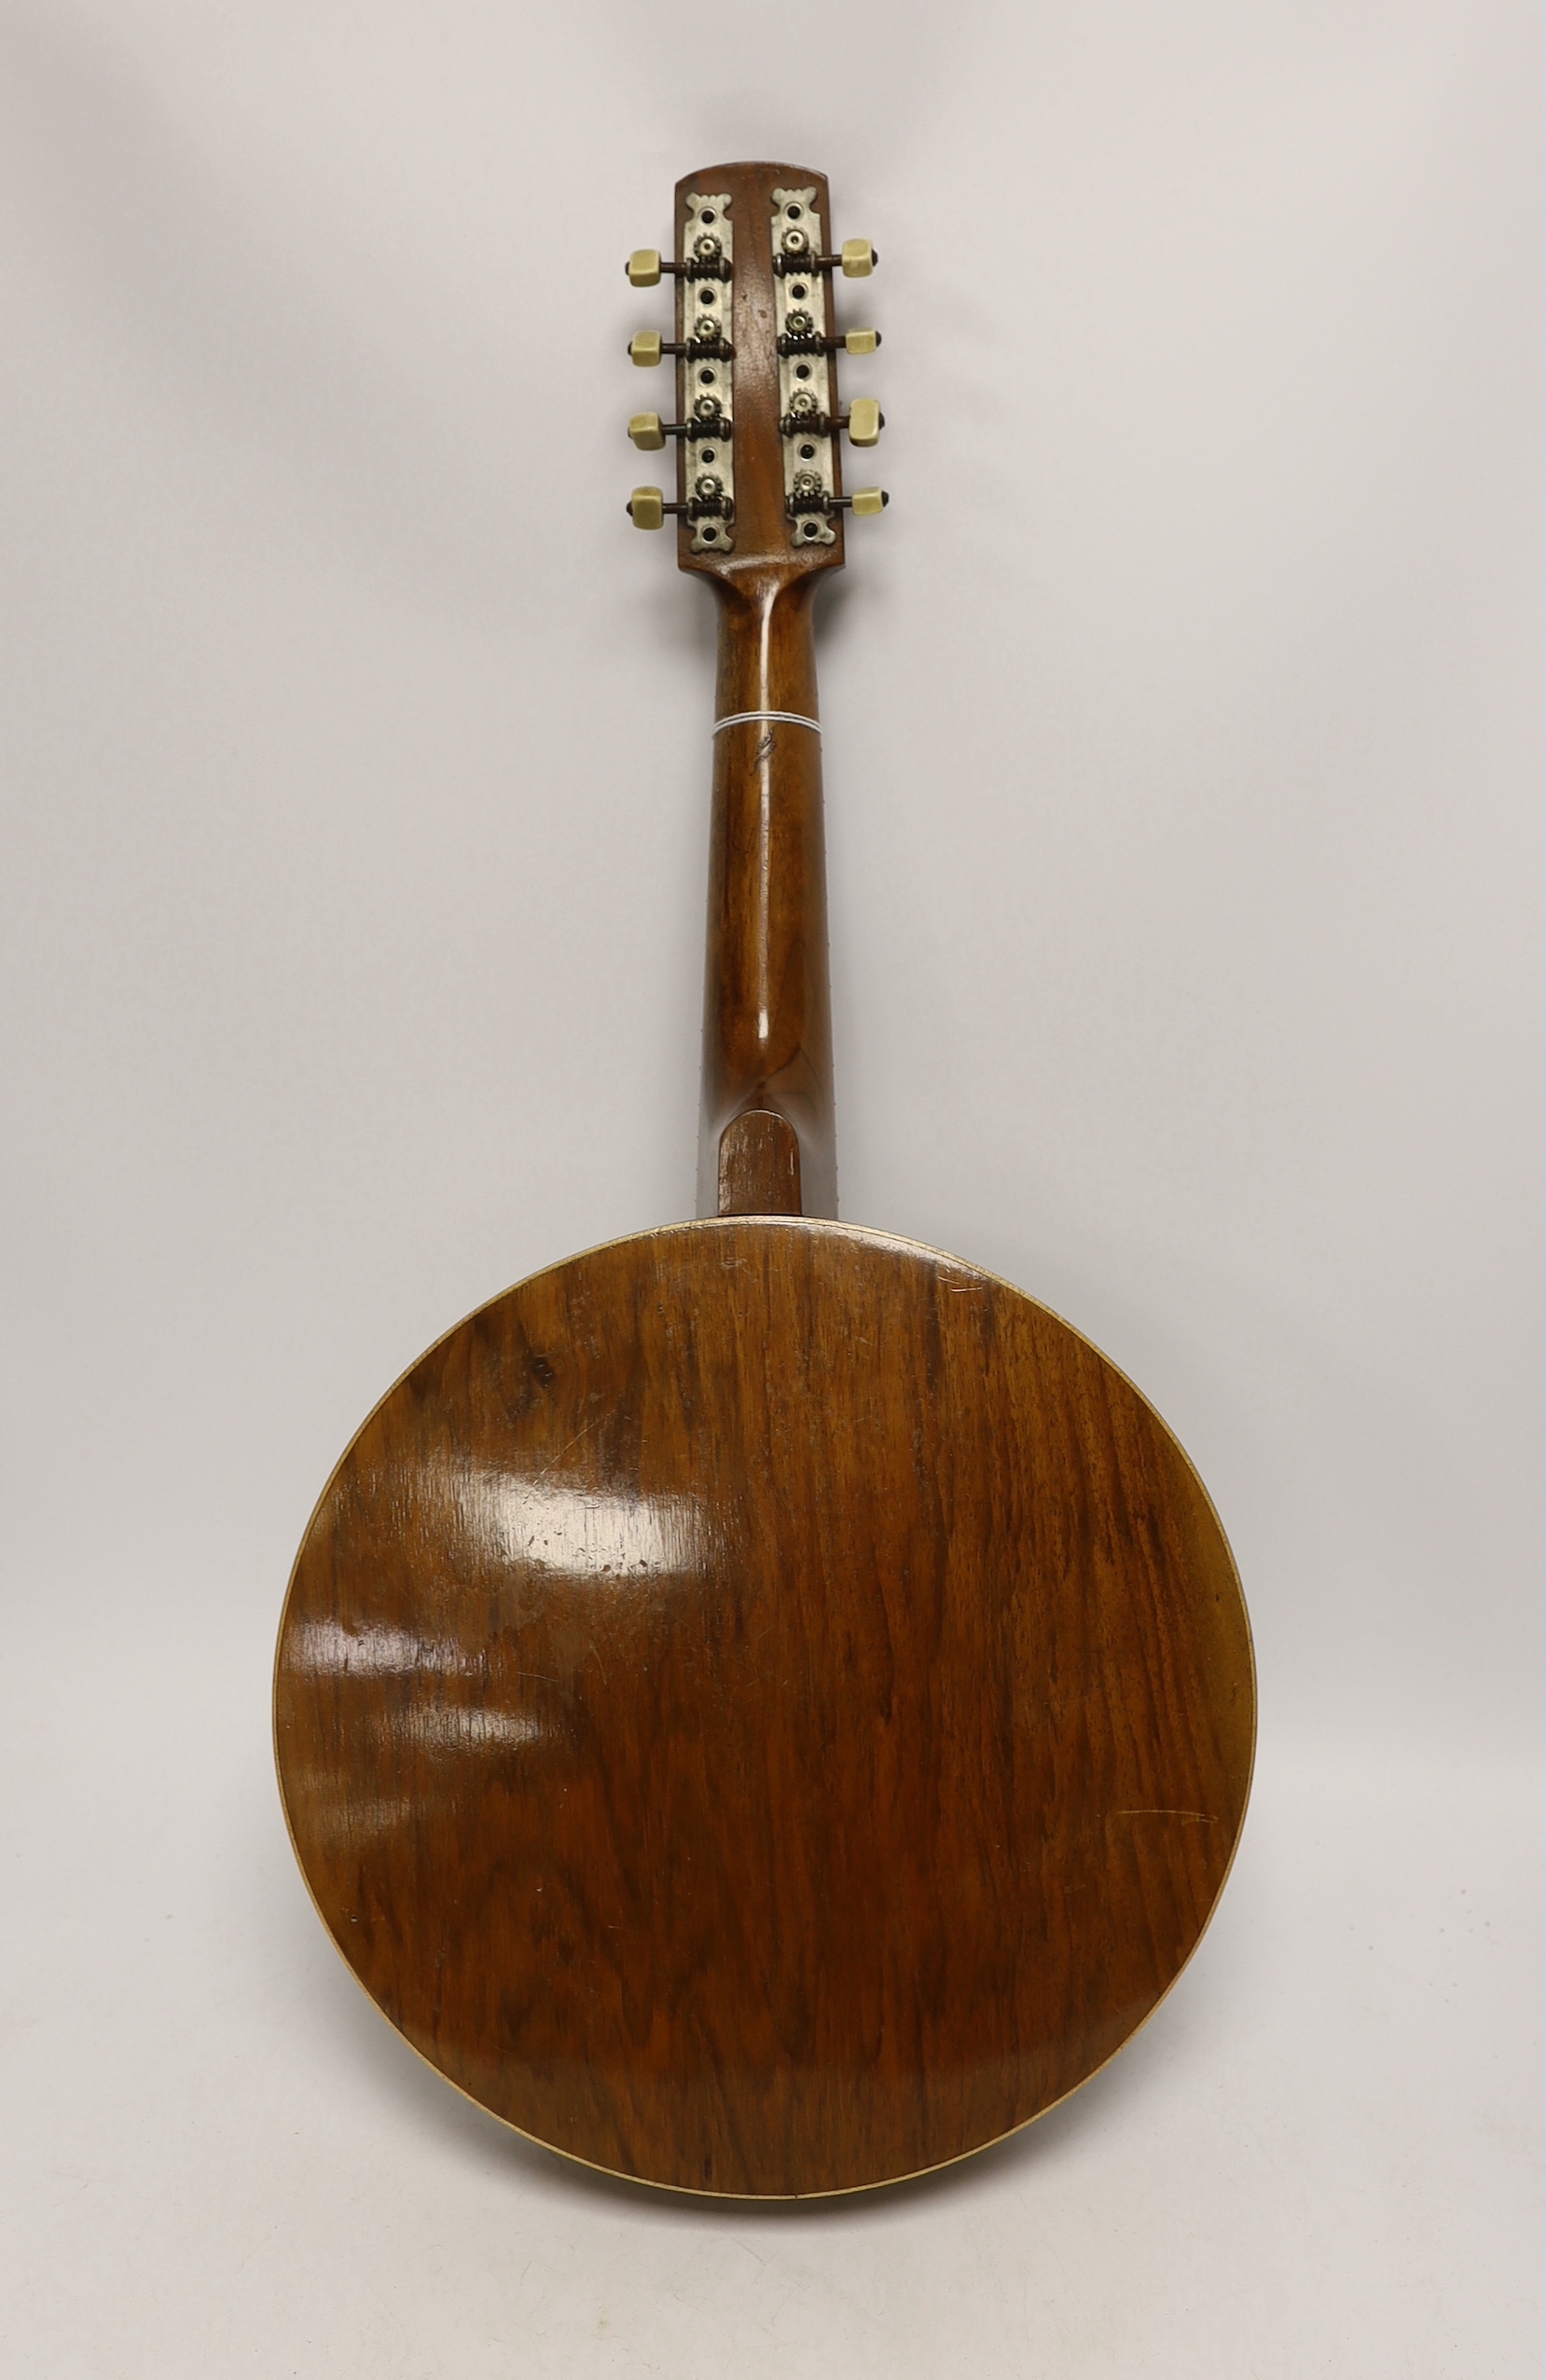 A banjo ukelele, Windsor model 4, 60cm long in a hard case